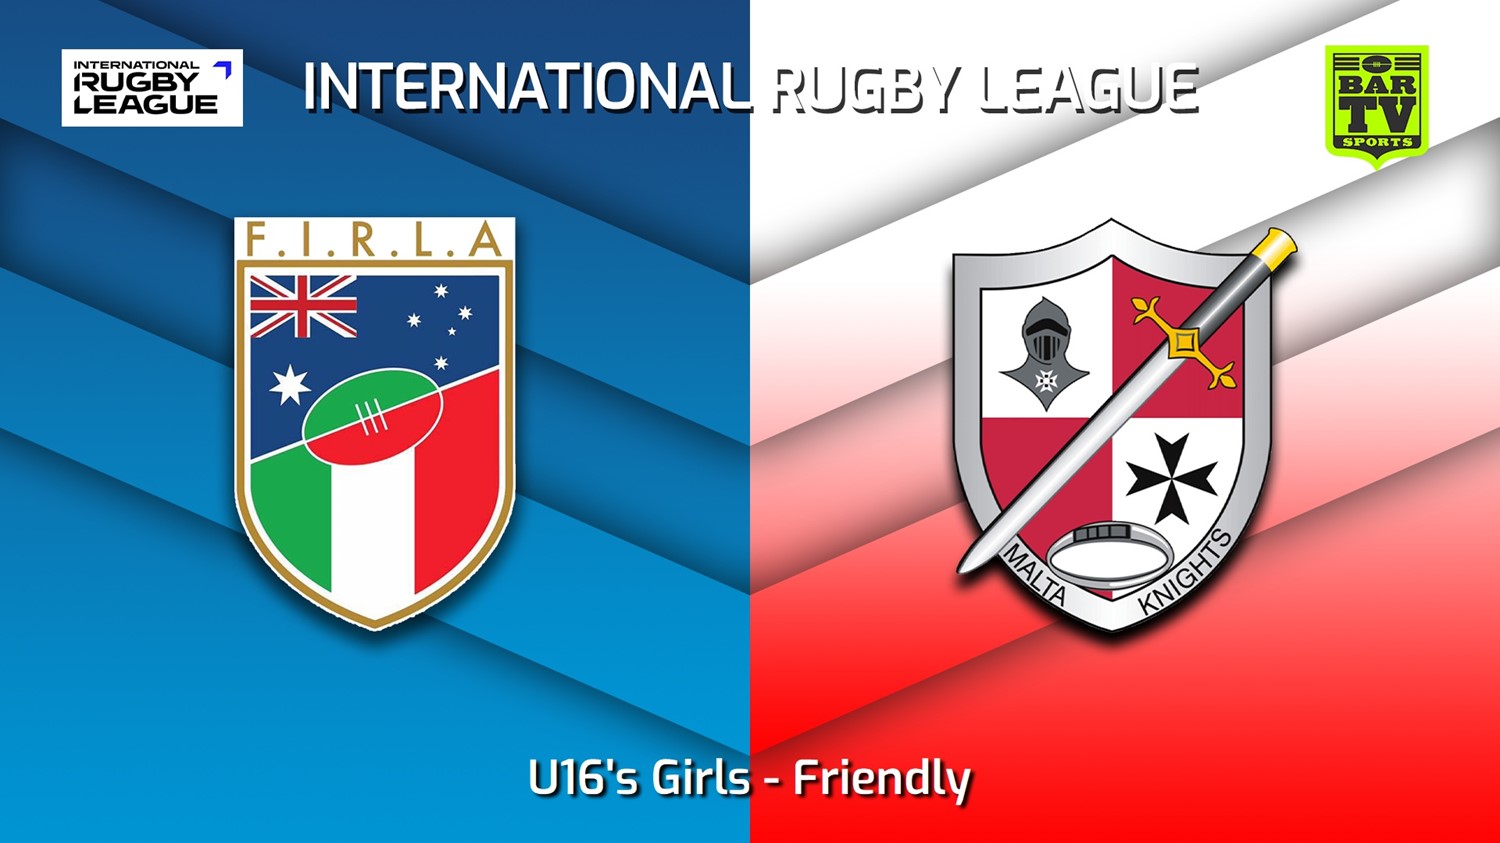 231007-International RL Friendly - U16's Girls - Federazione Italiana Rugby League Australia v Malta Minigame Slate Image